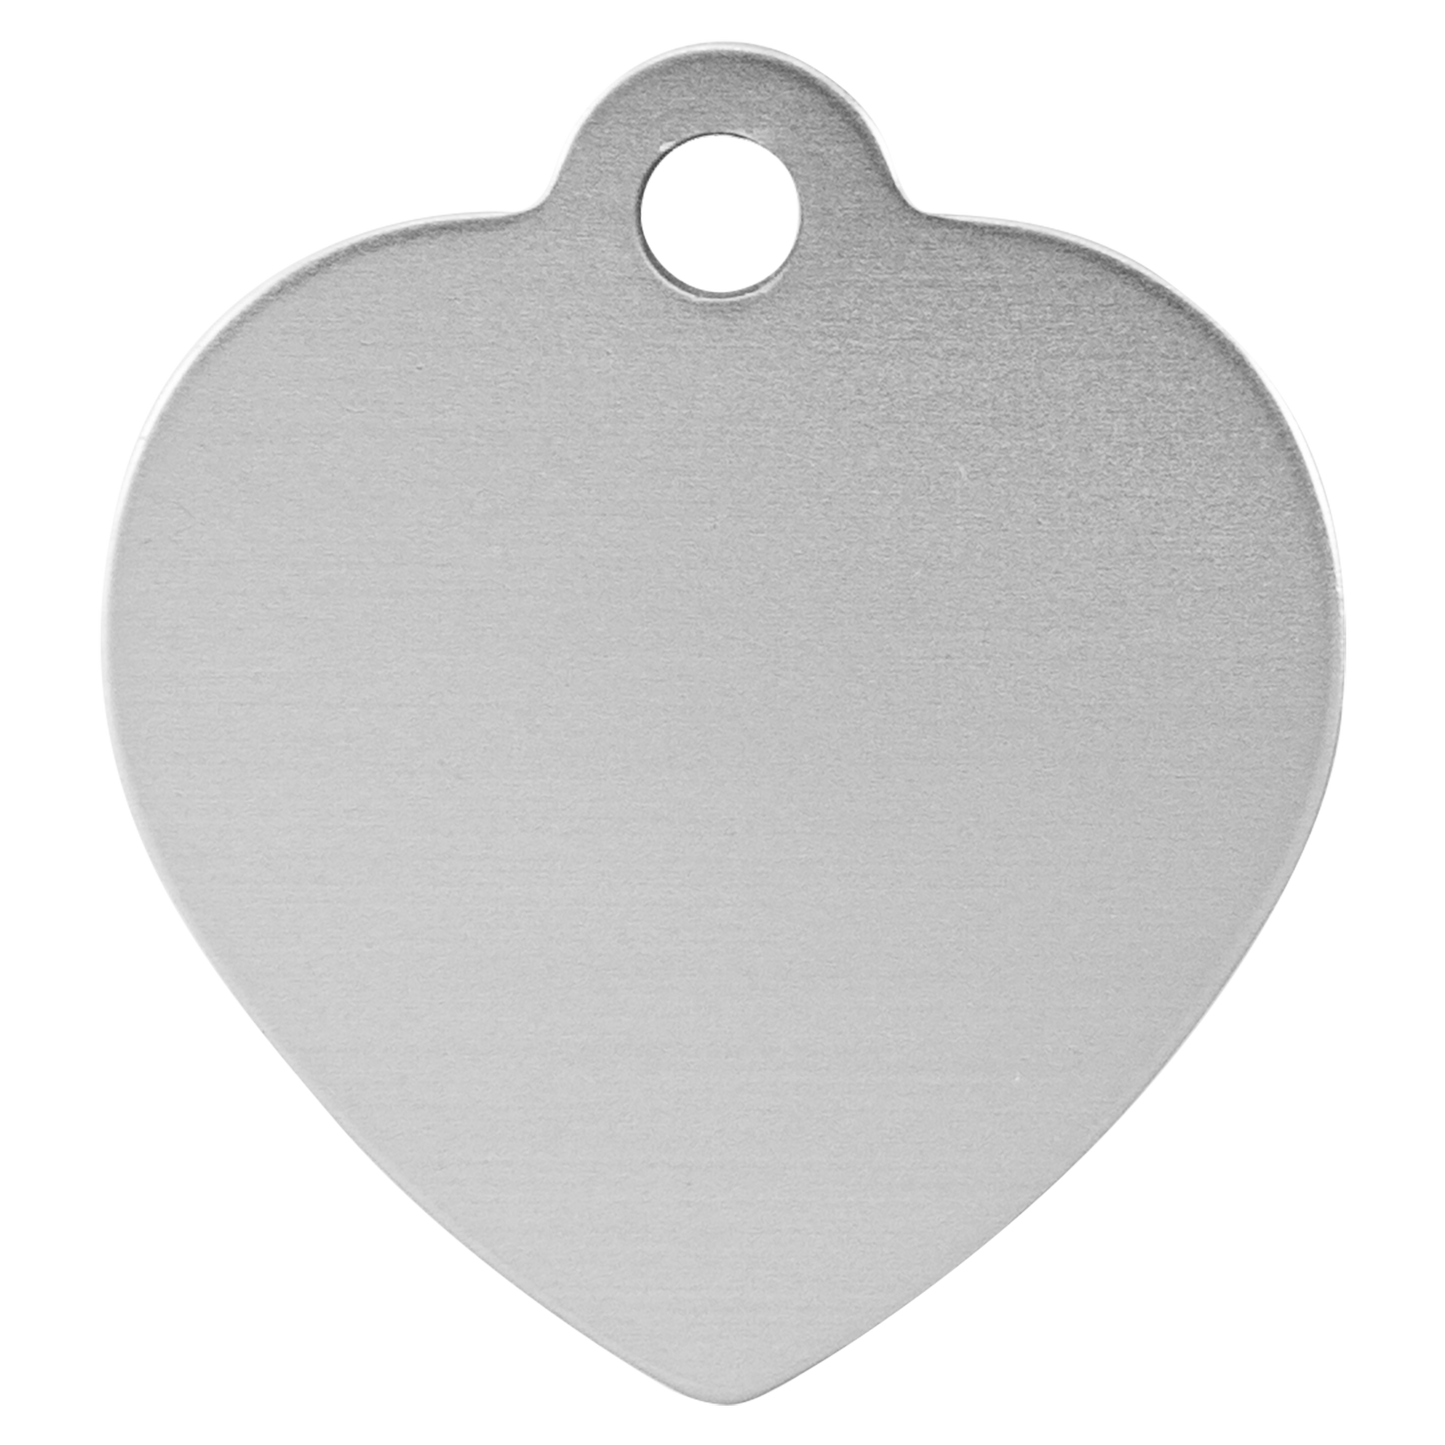 B.O.G.O. LARGE 1 1/4" x 1 1/4" Silver Anodized Aluminum Heart Pet Tag